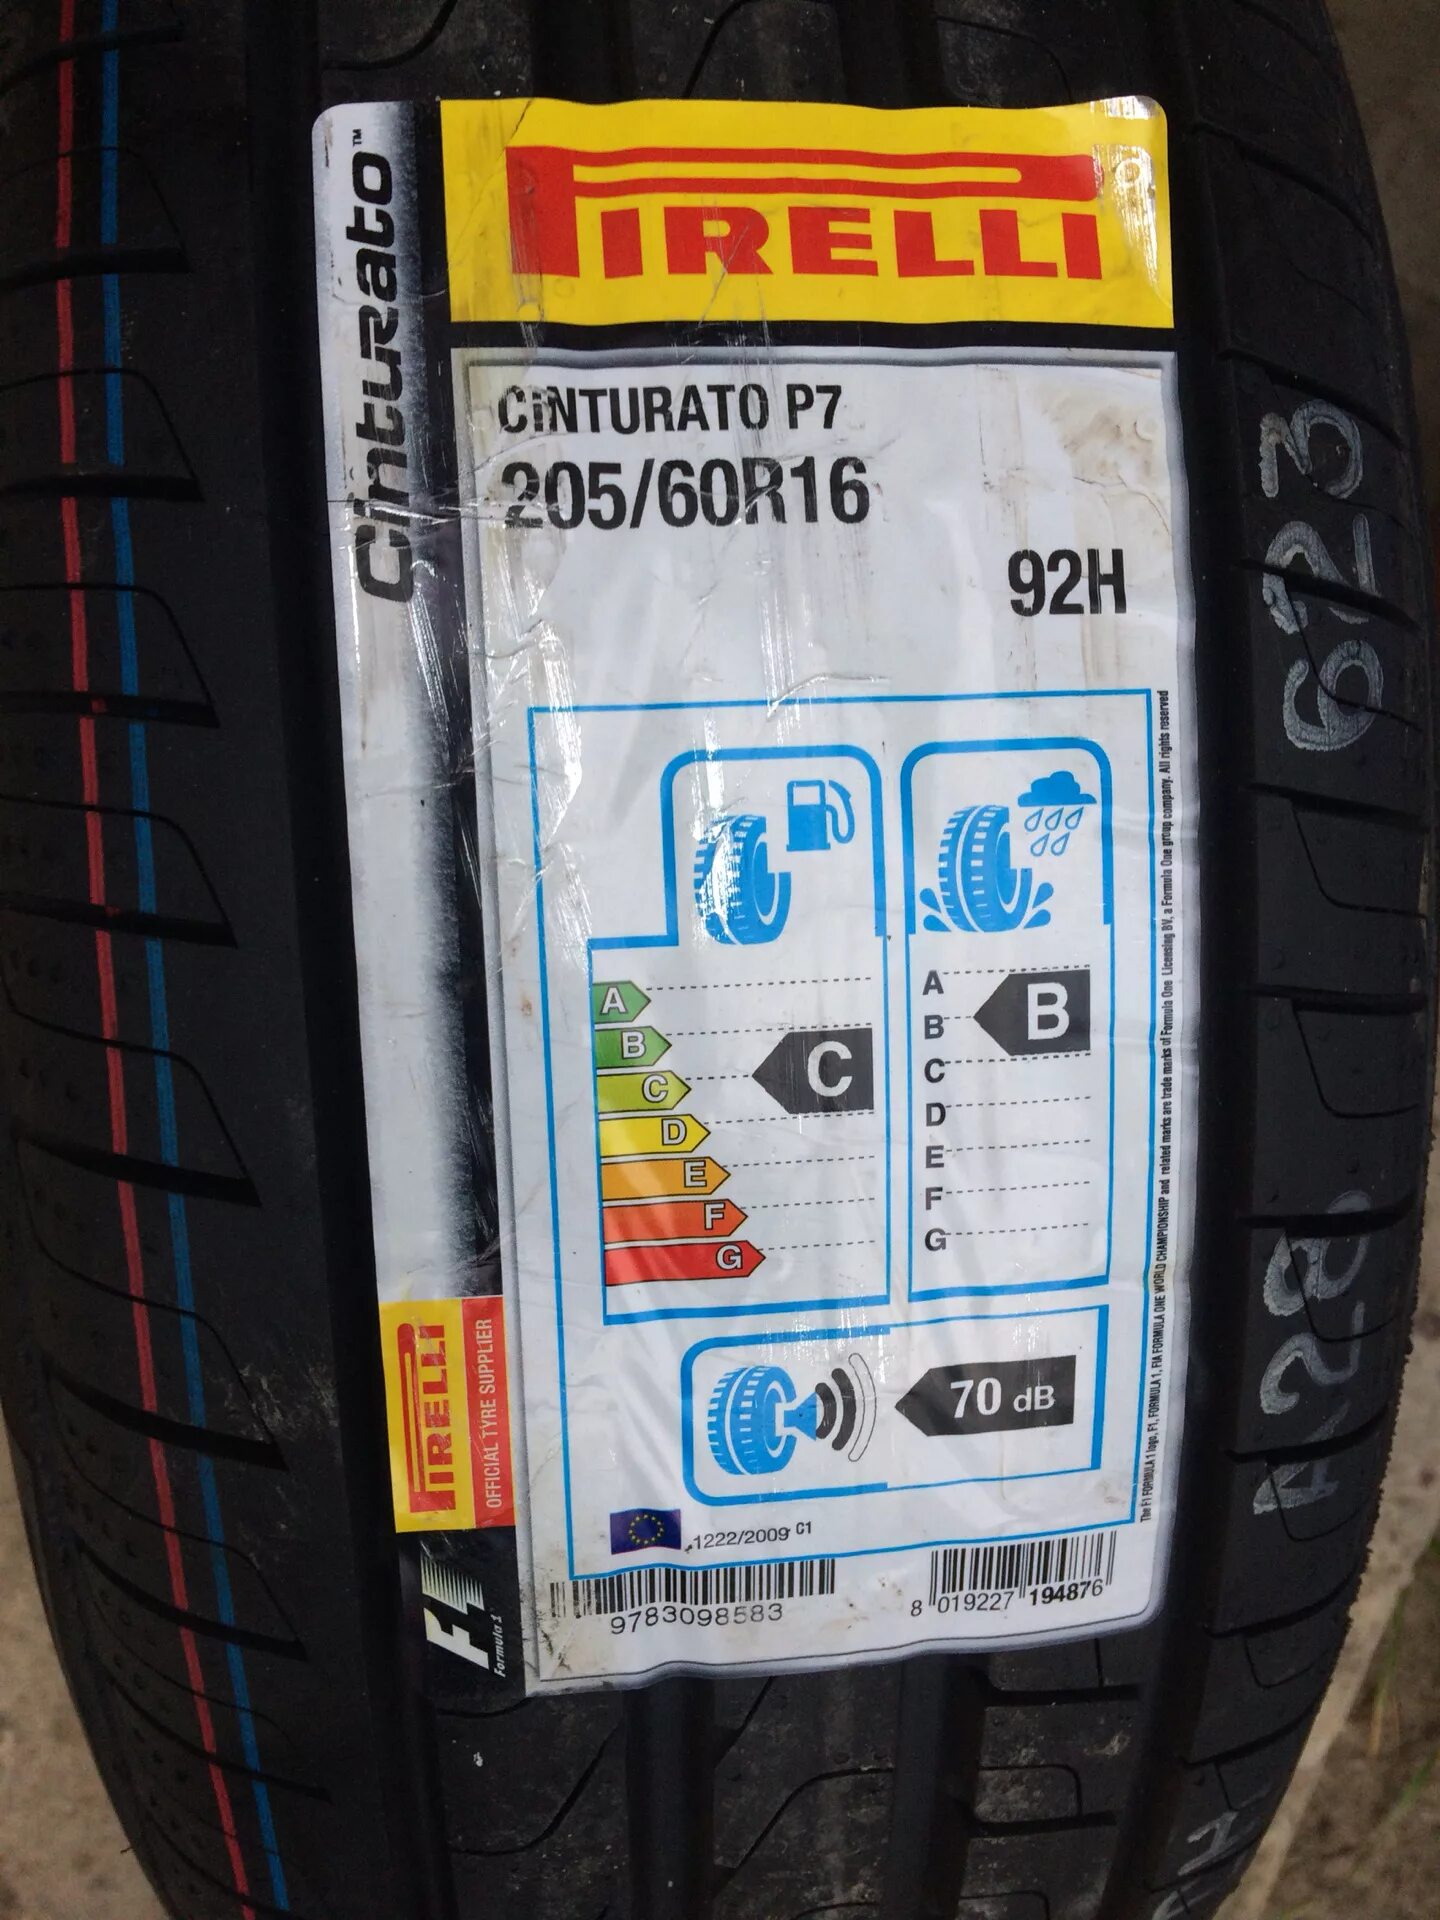 Шины пирелли r16 отзывы. 205/60/16 Pirelli Cinturato p7. Автошина 205/60-16 Pirelli Cinturato p7 92h. Шины Пирелли Цинтурато р7 205/60 r16. Пирелли p7 205/60 r16.